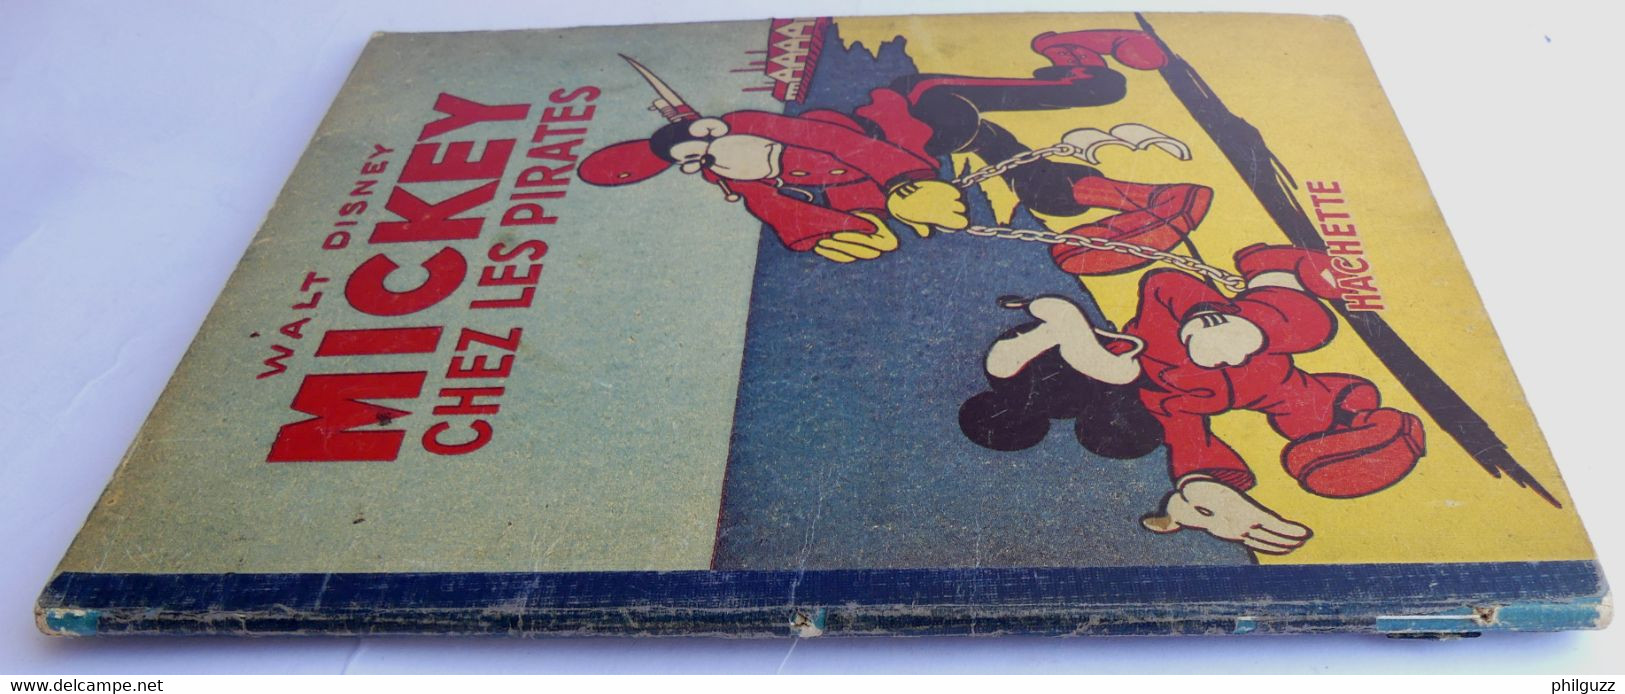 ALBUM BD MICKEY CHEZ LES PIRATES - HACHETTE  - 1948 Enfantina - Disney